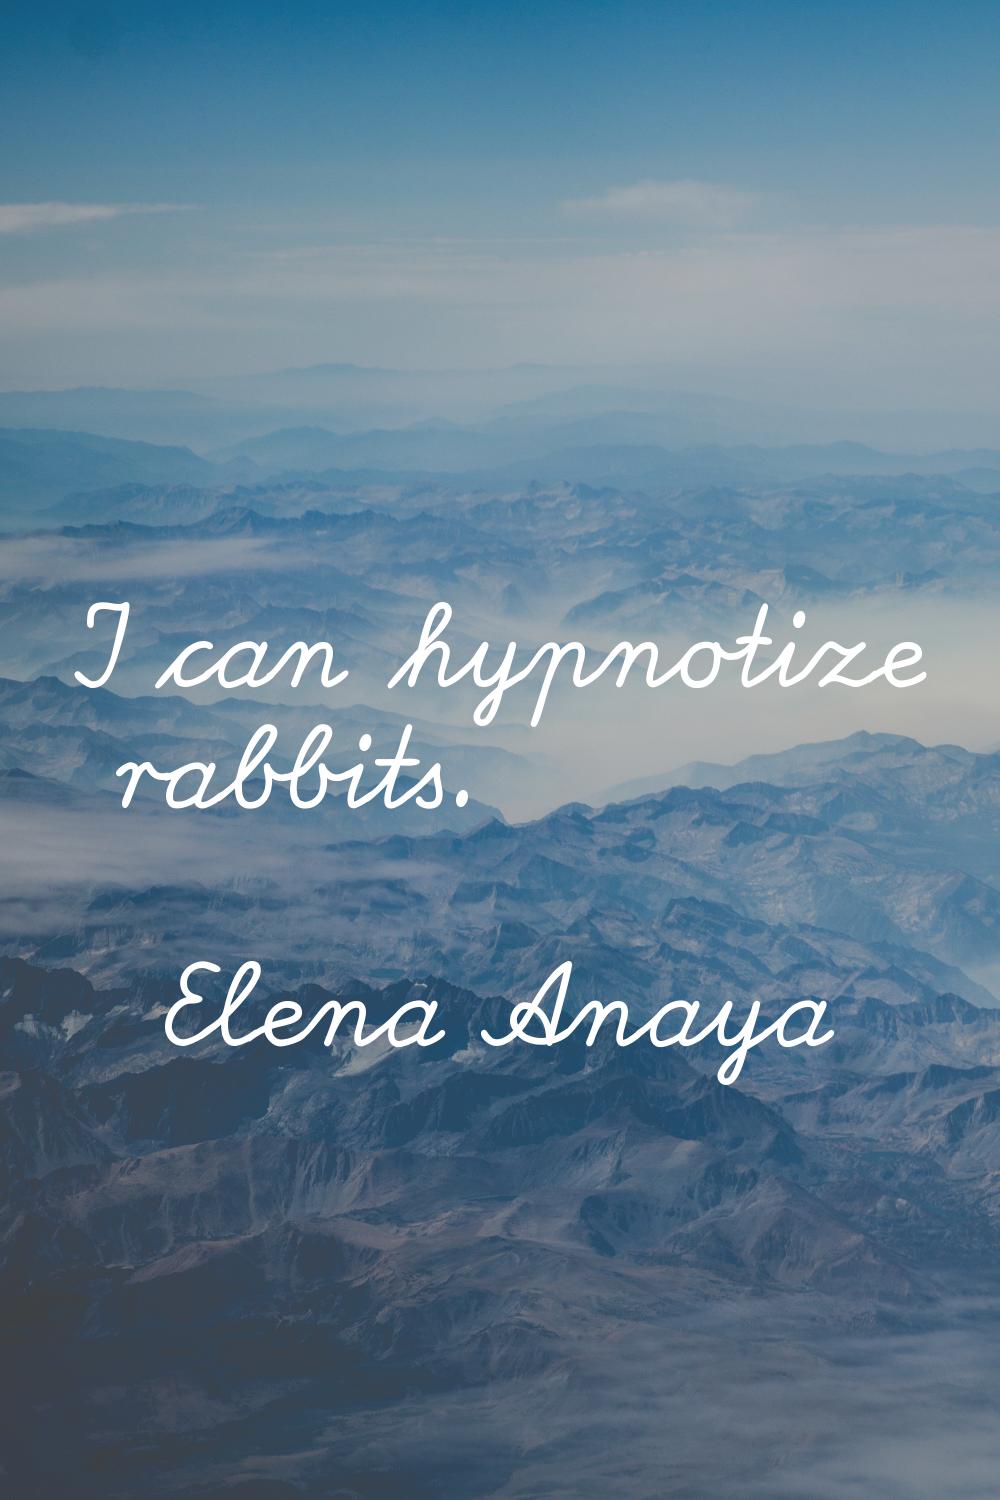 I can hypnotize rabbits.